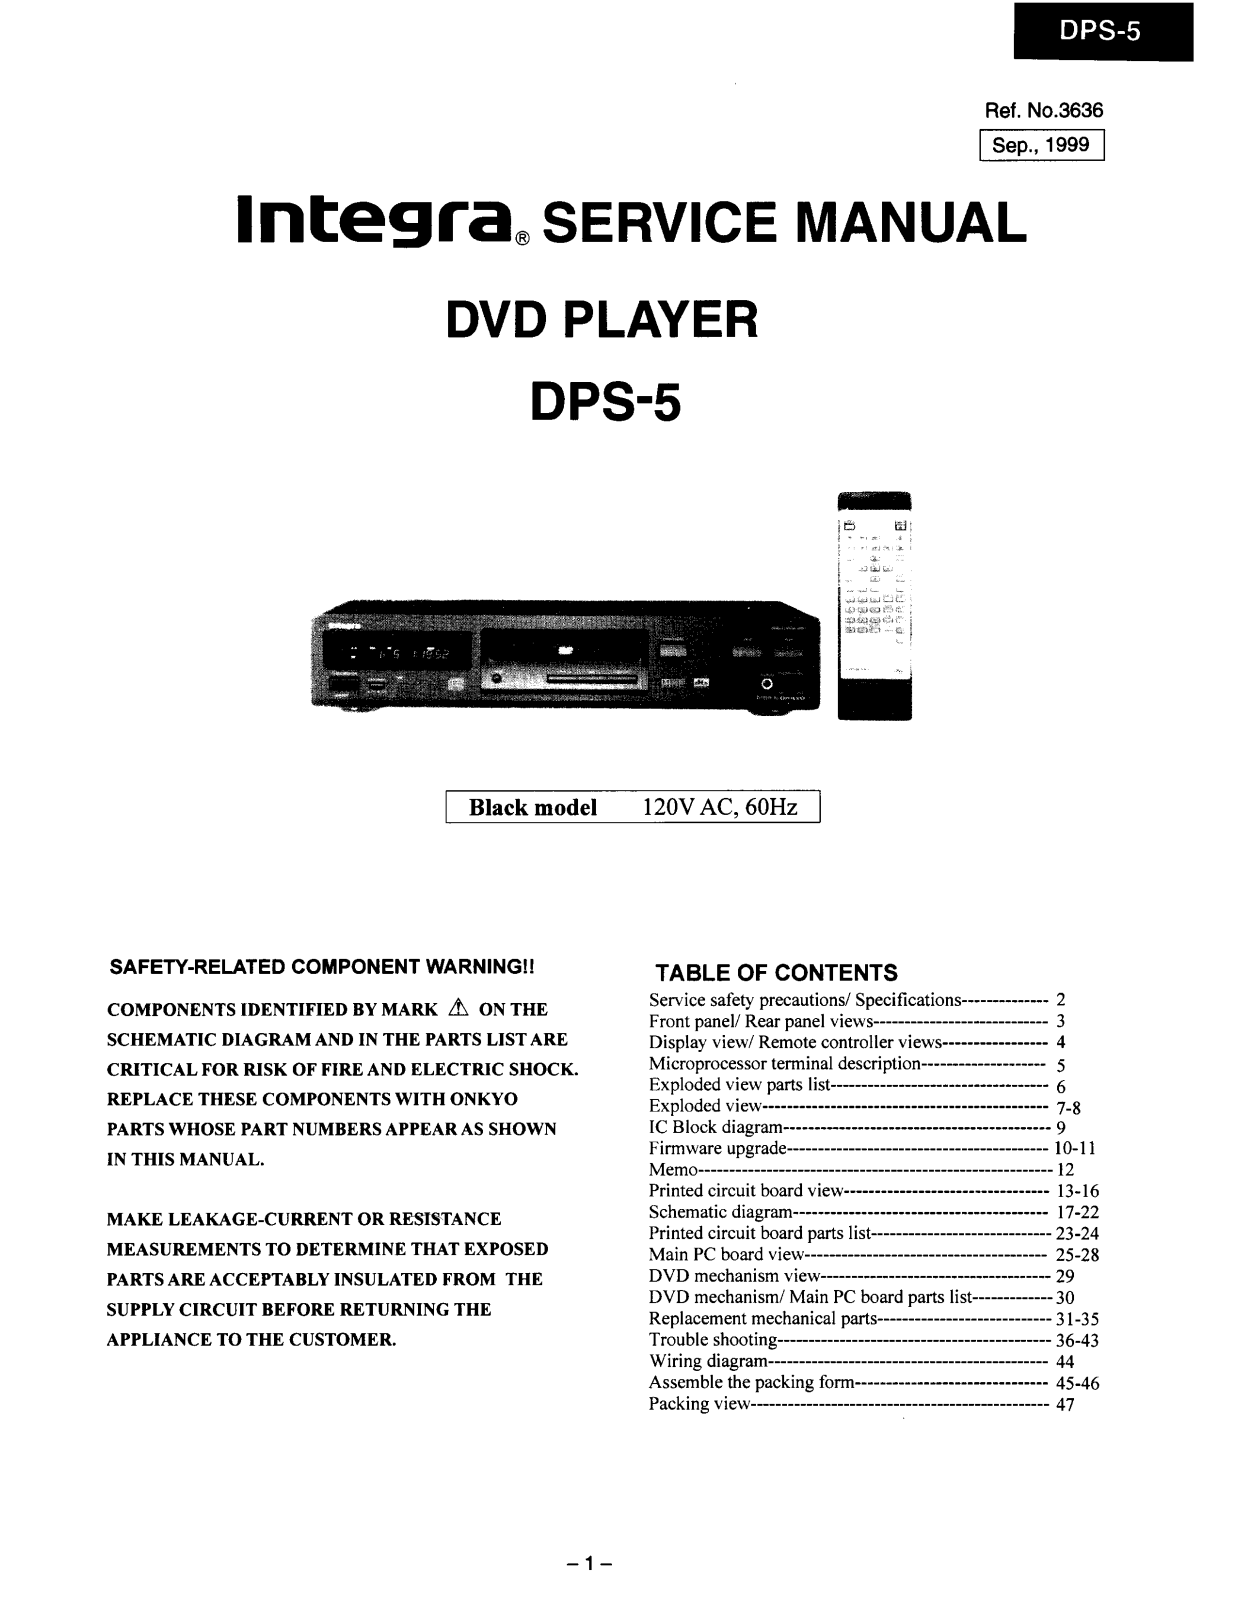 Onkyo DPS-5, DPS-5 Service manual